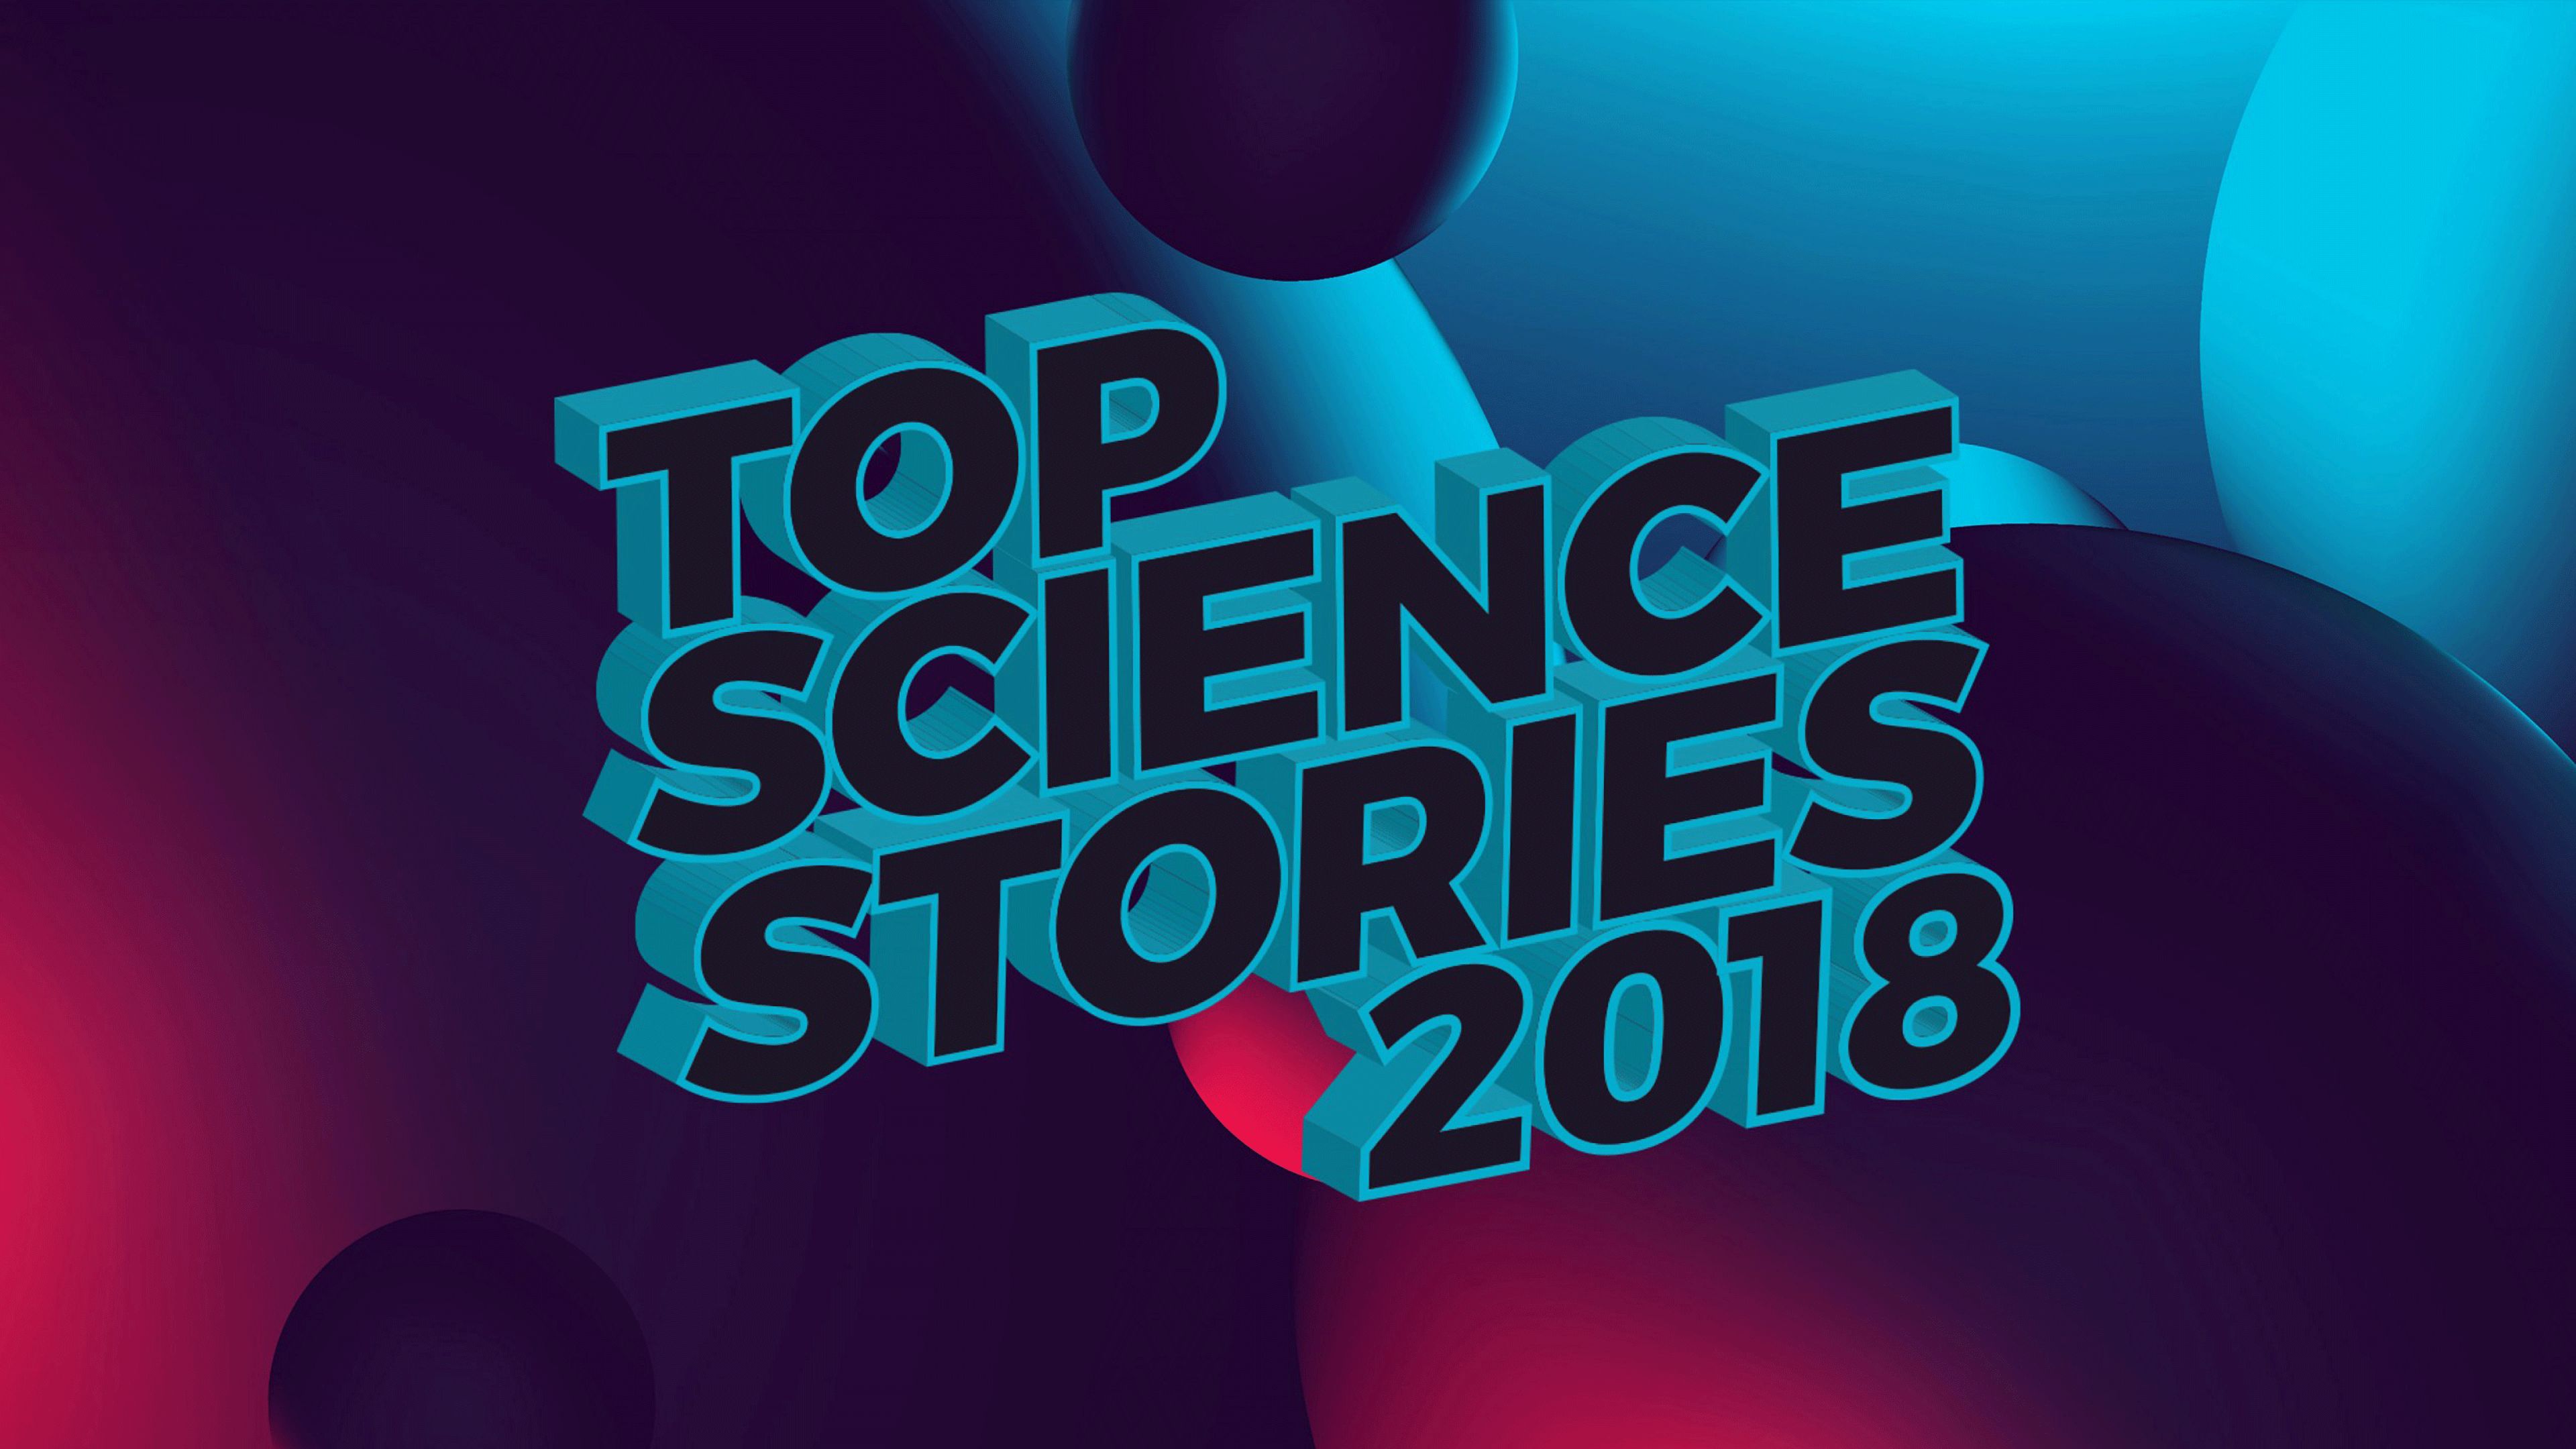 Top Science Stories of 2018